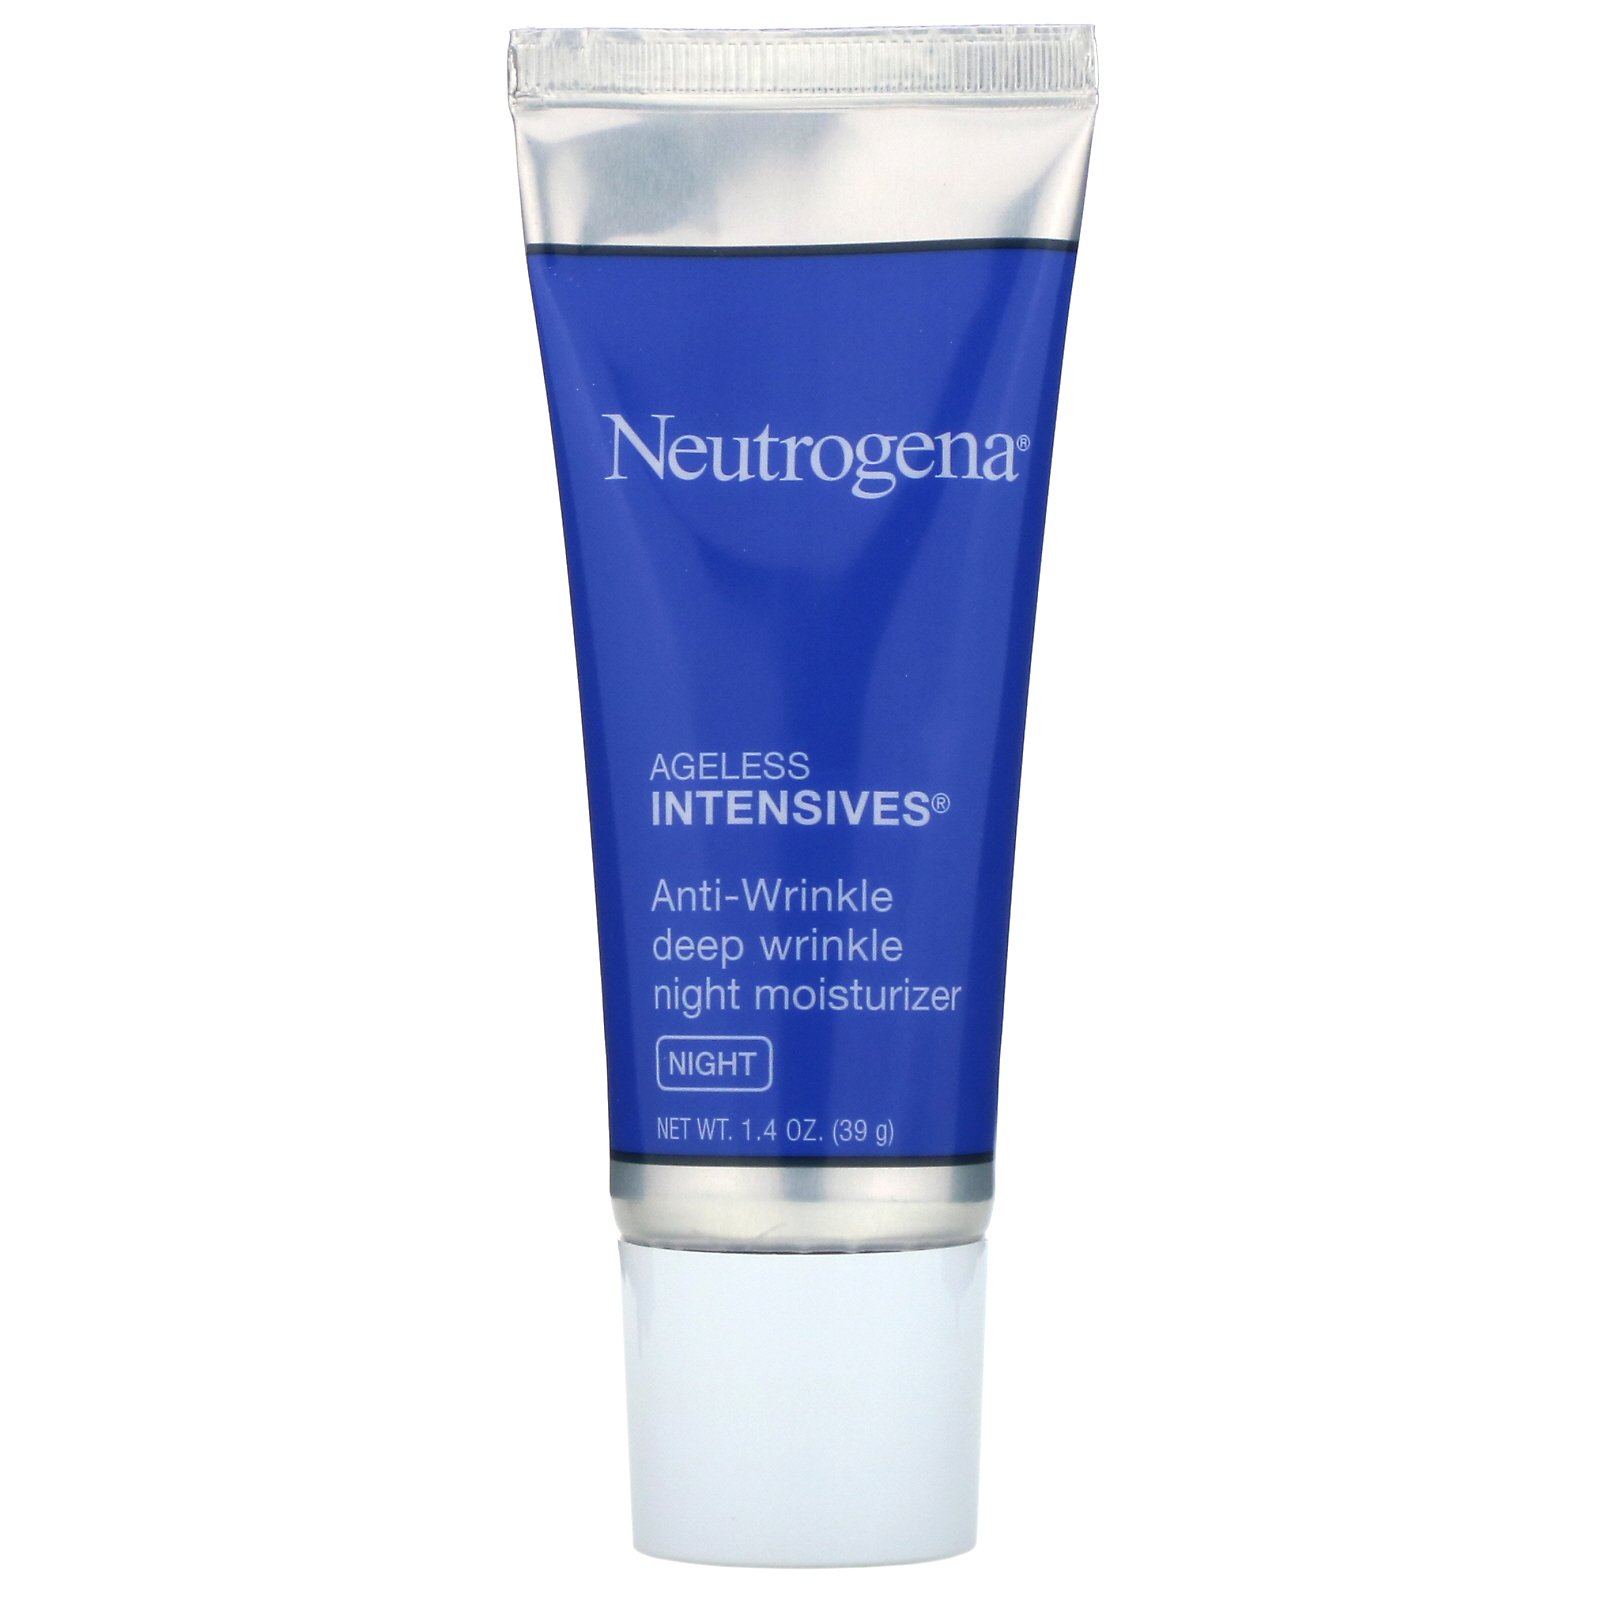 neutrogena anti wrinkle cream night